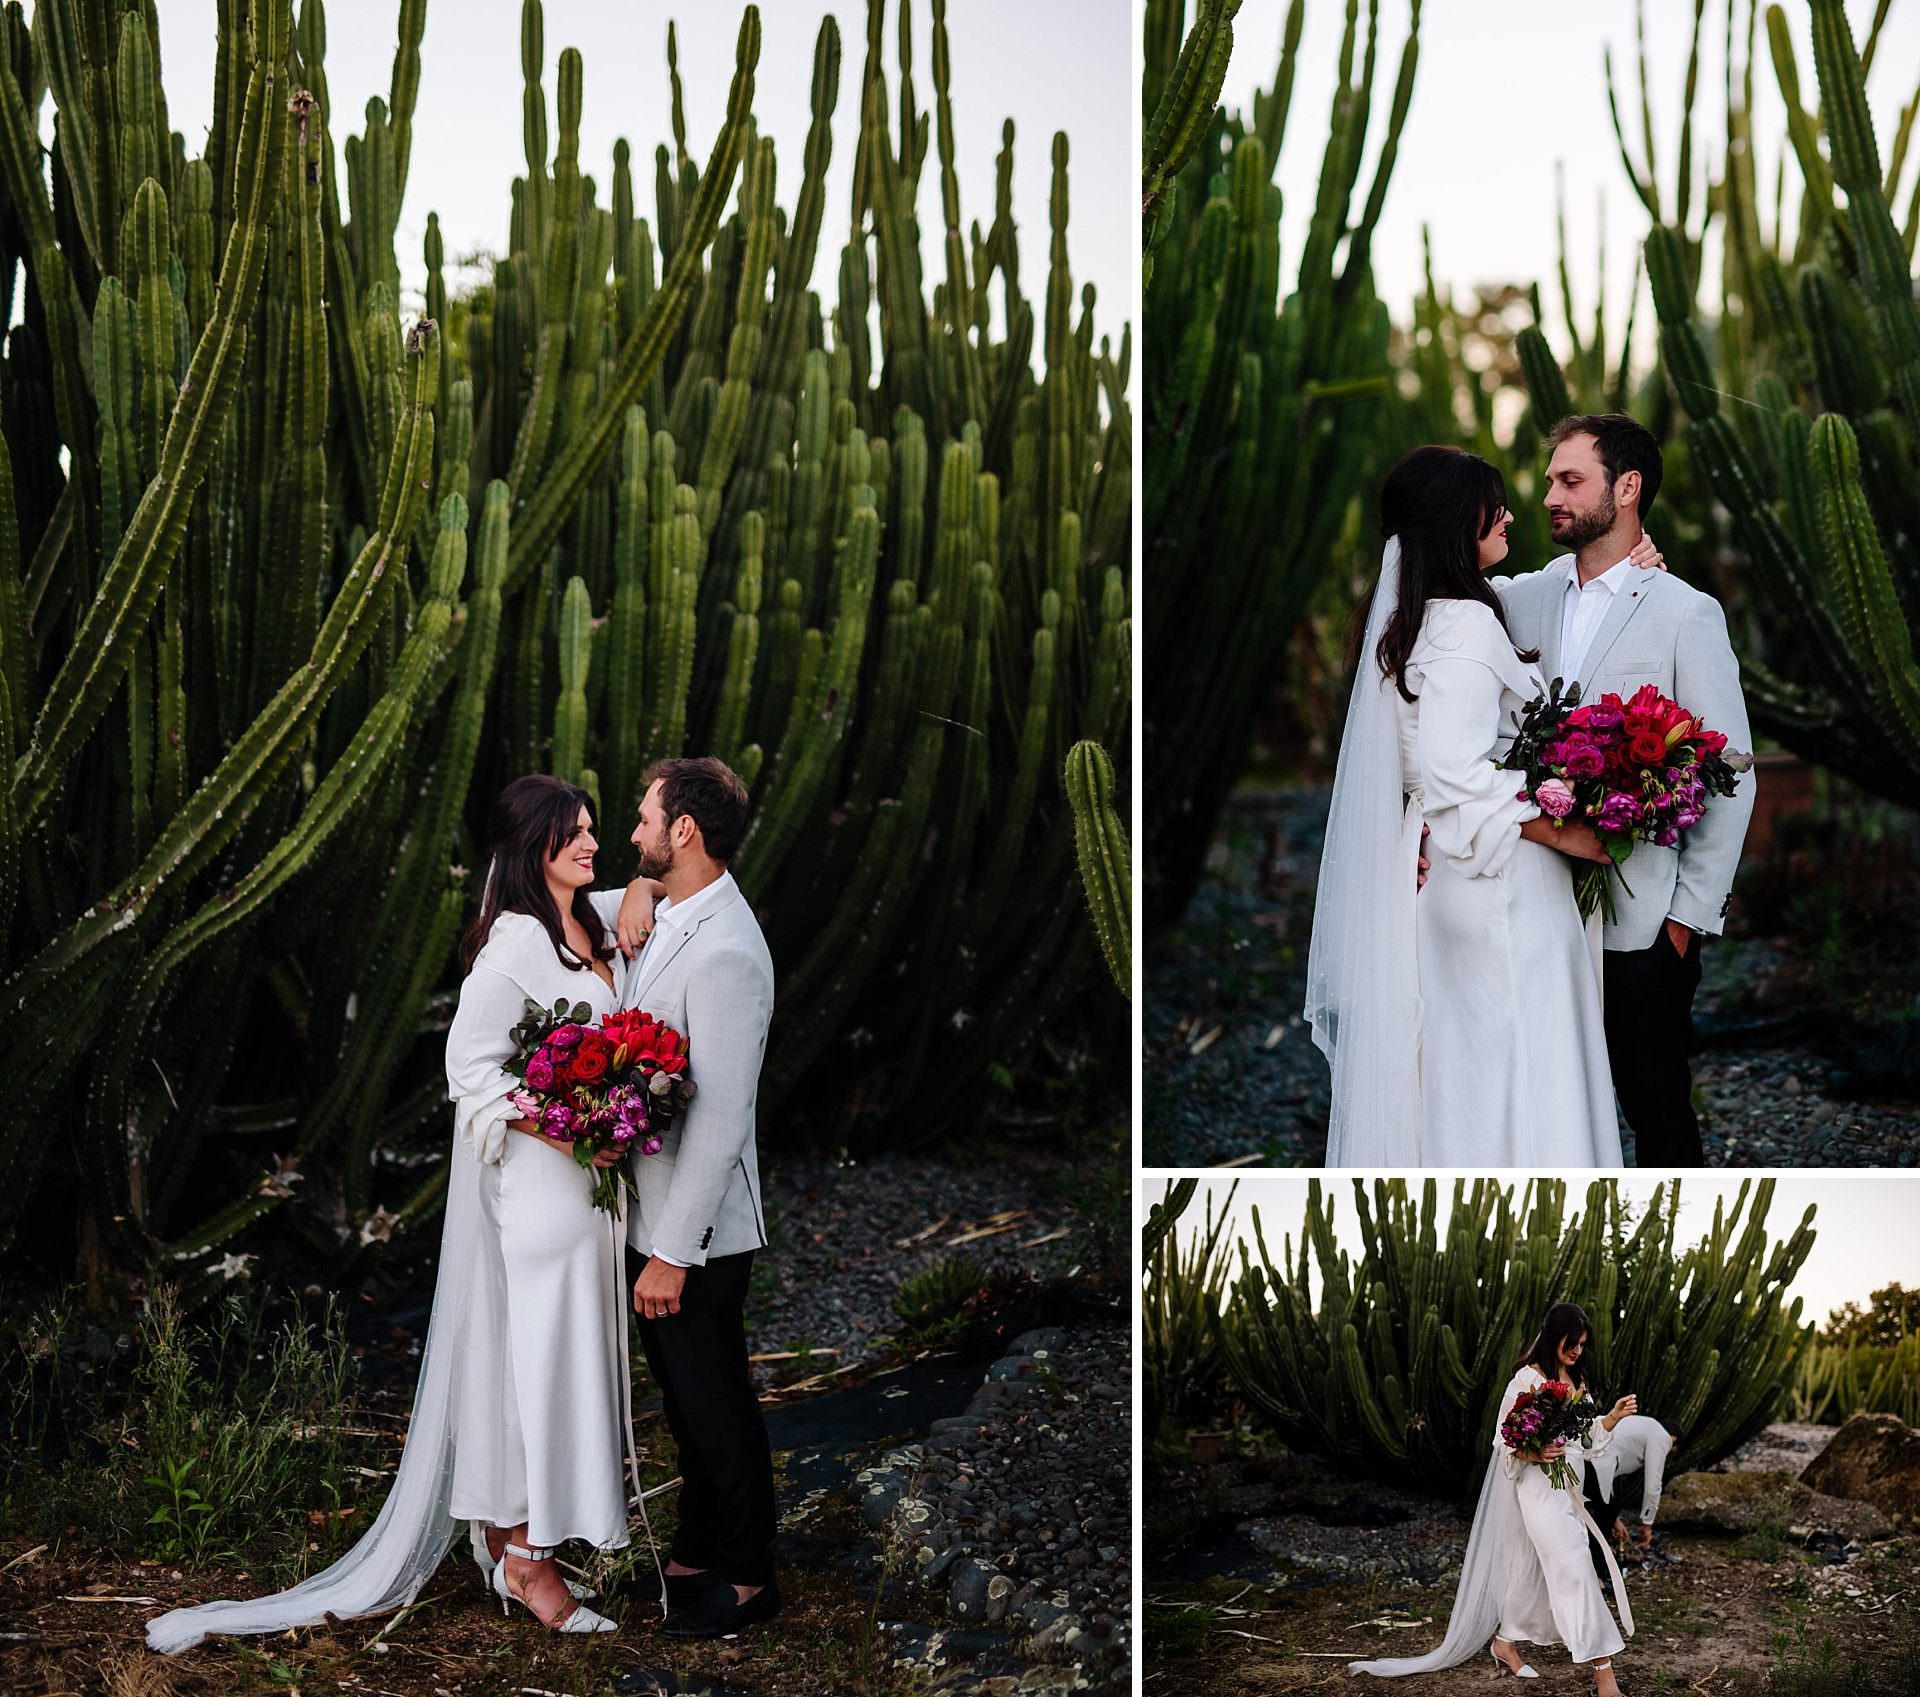 Hamilton Cactus Garden wedding photo of bride and groom at sunset